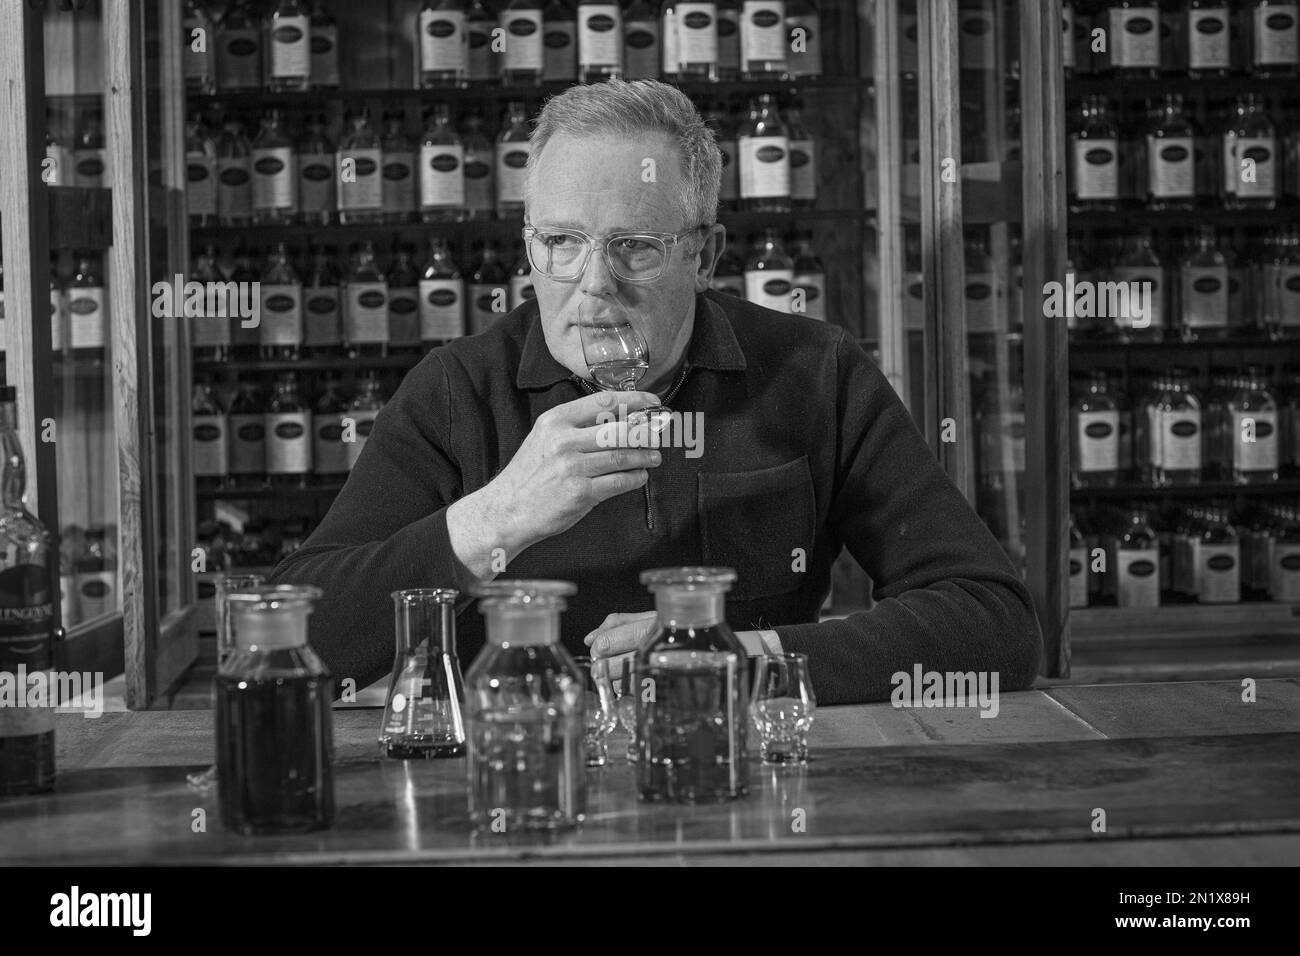 Glengoyne brand manager Stuart Henry at Glengoyne Distillery, Killearn, Glasgow, Scotland Stock Photo